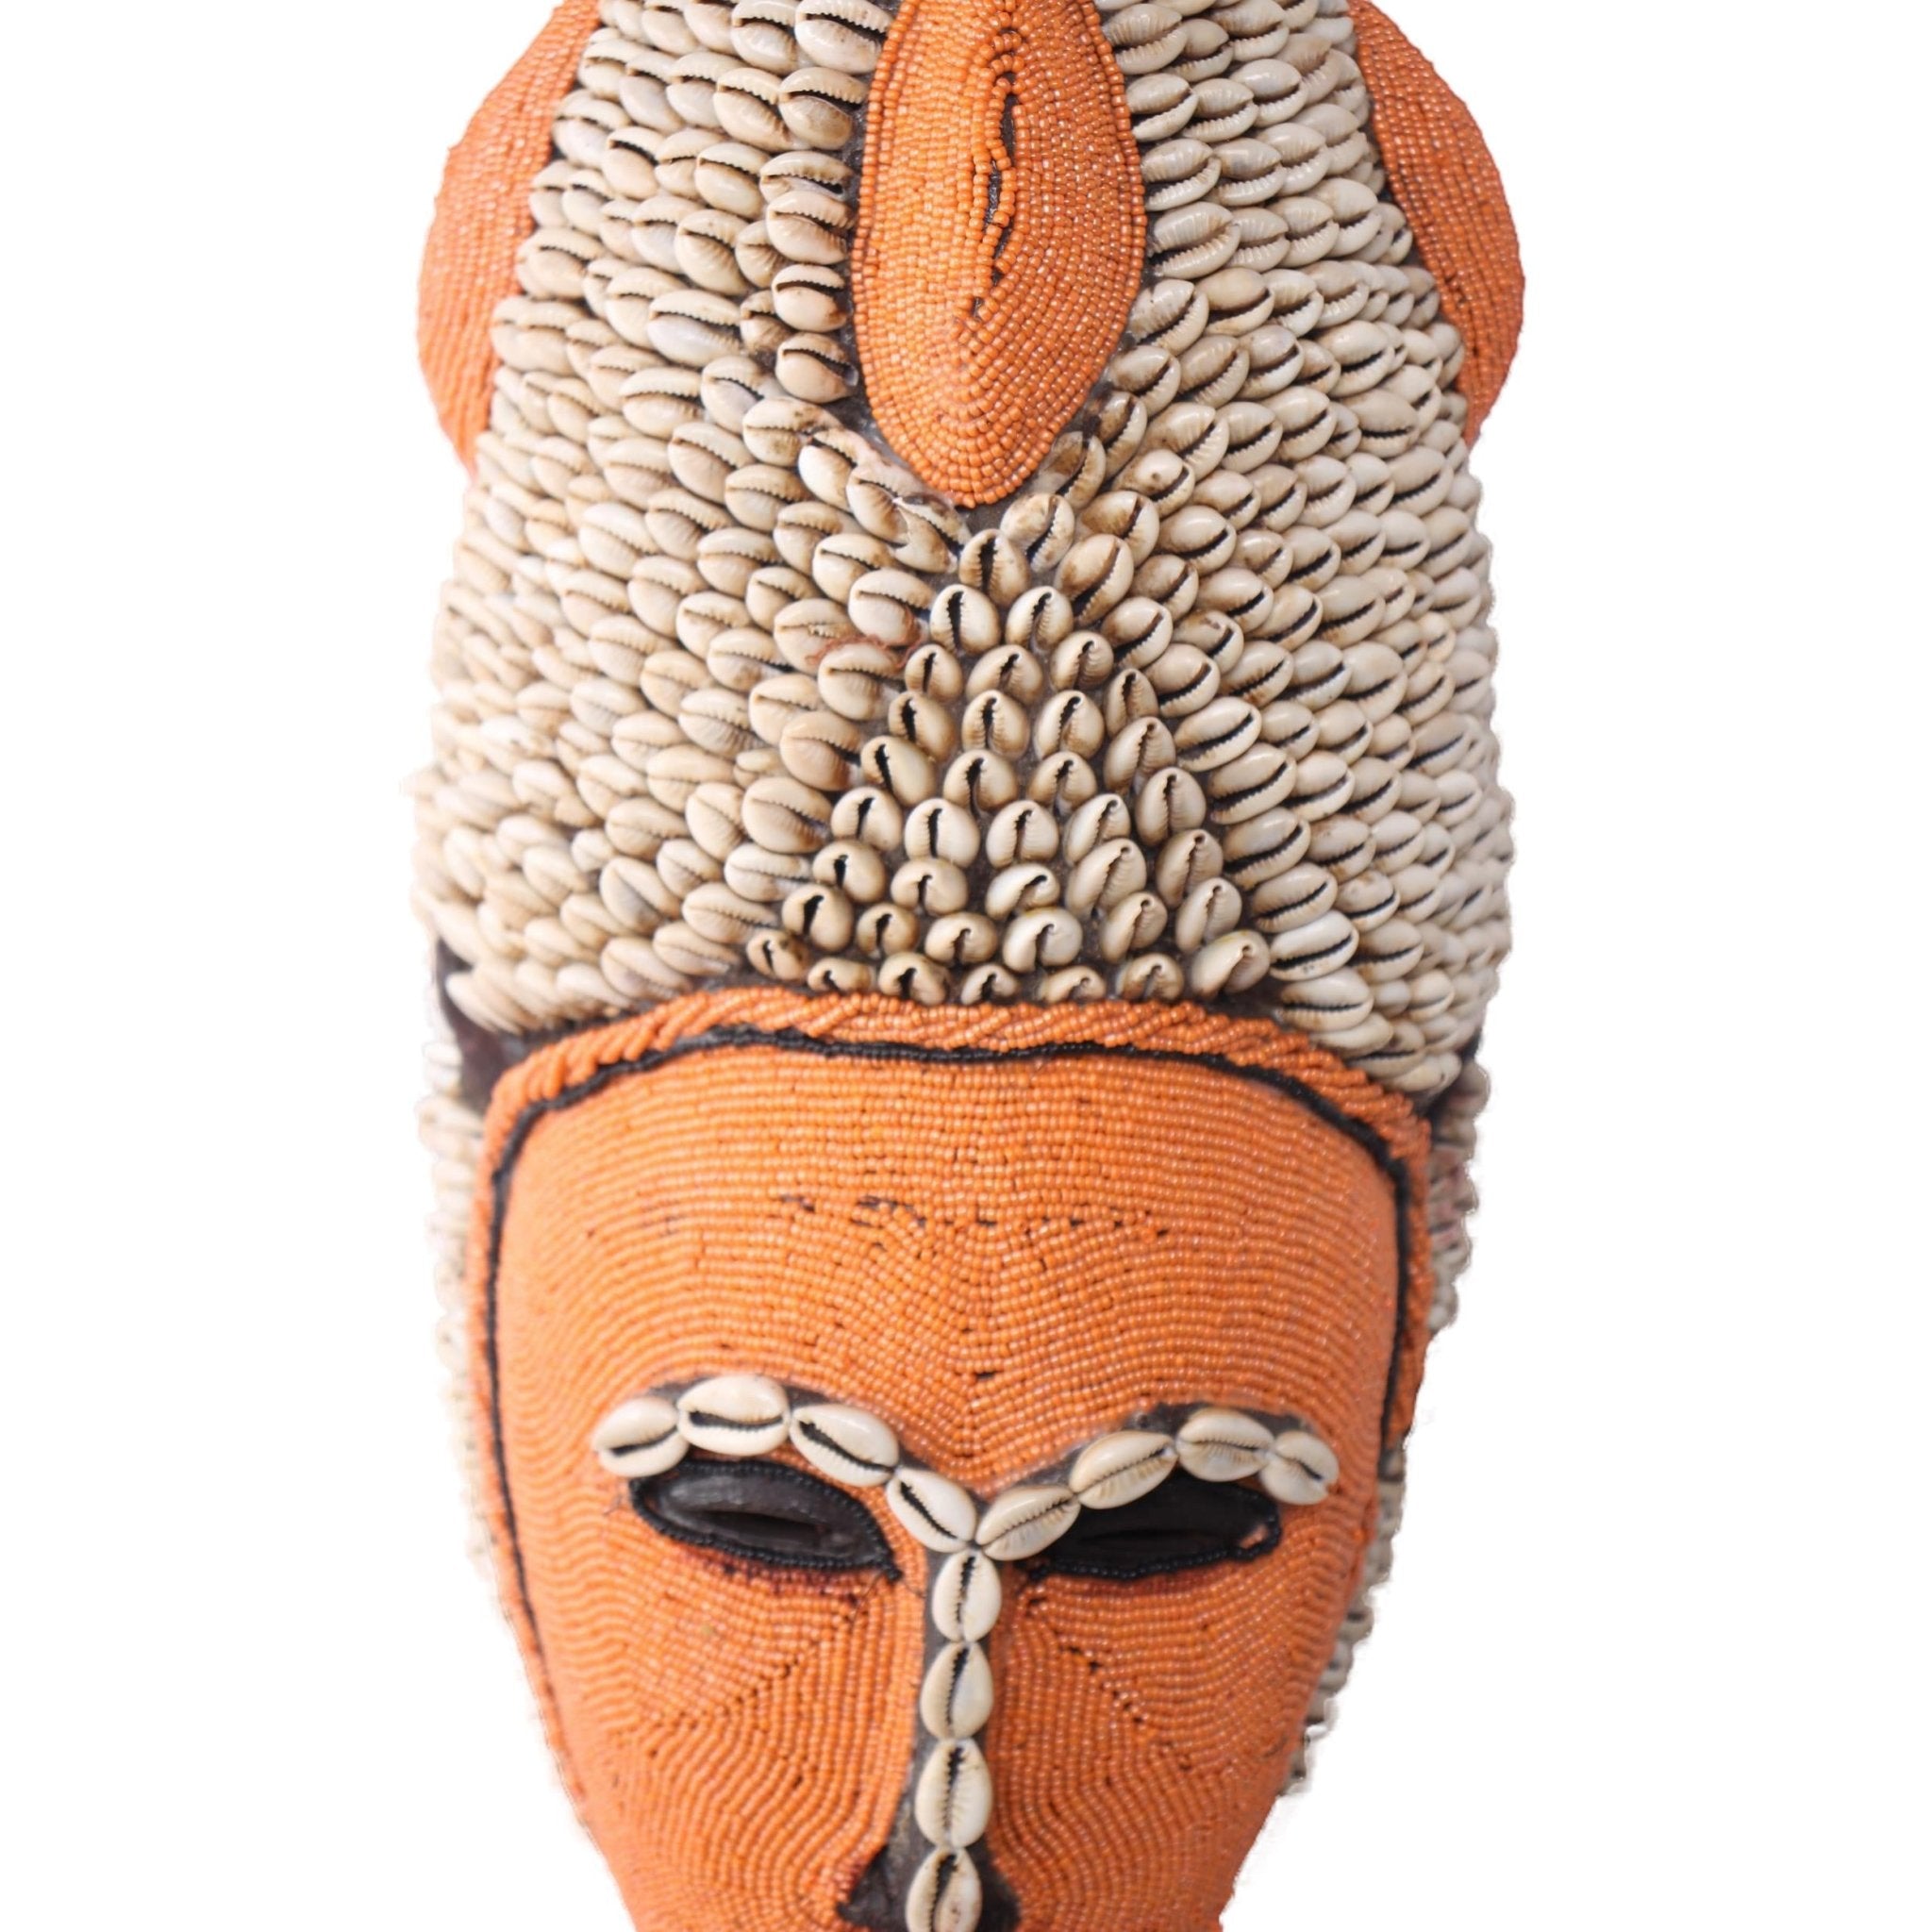 Baule Tribe Mask ~17.3" Tall - African Angel Art - Mask